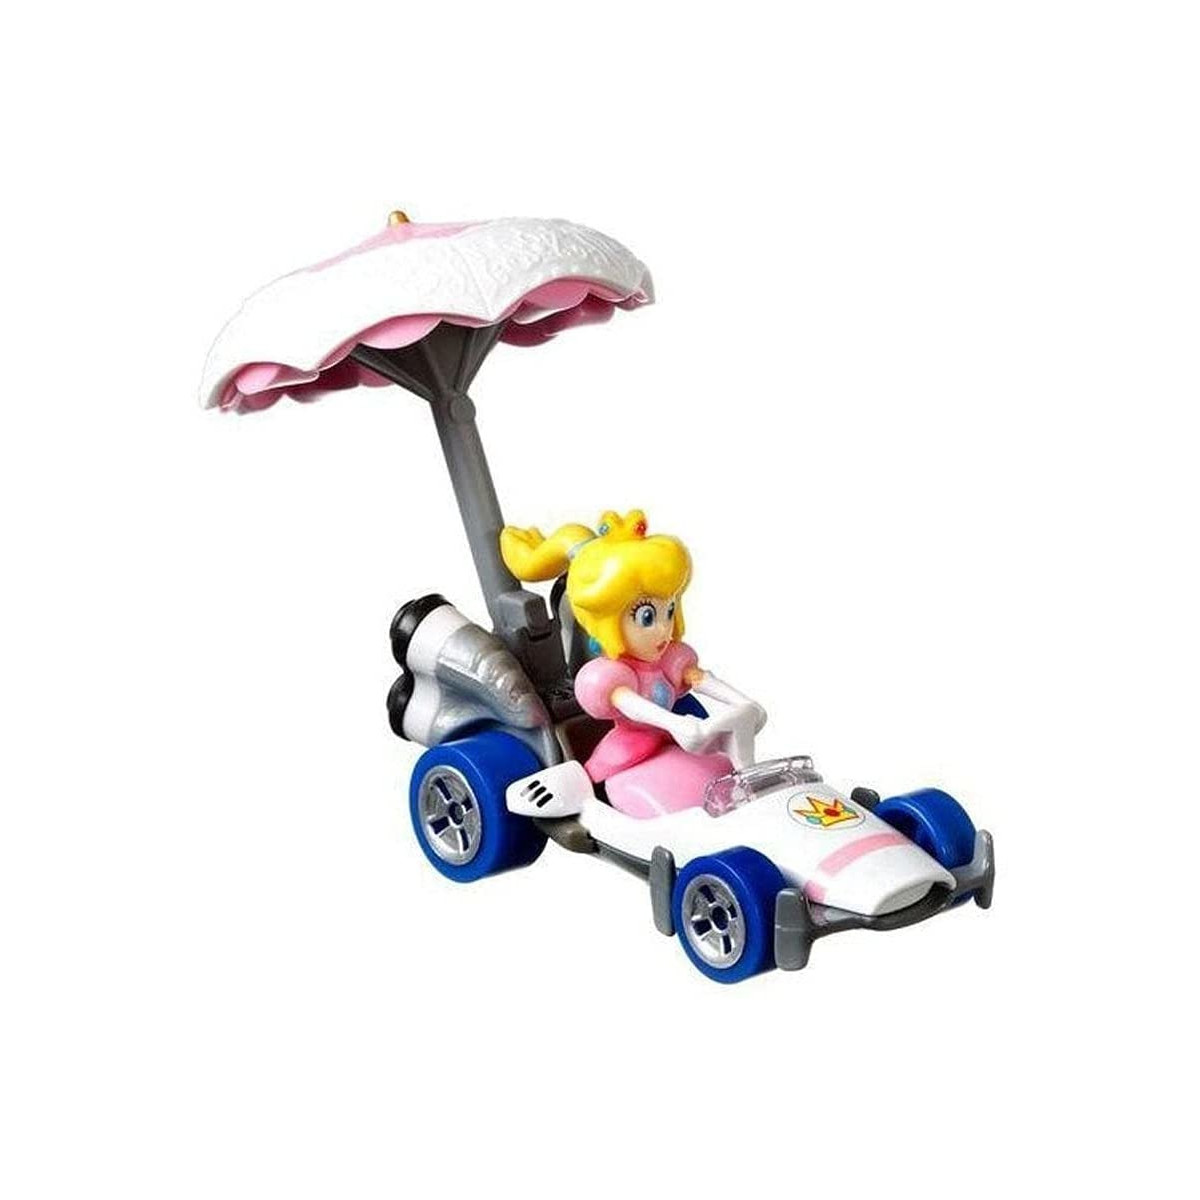 MATTEL Hot Wheels - Kart Mario \